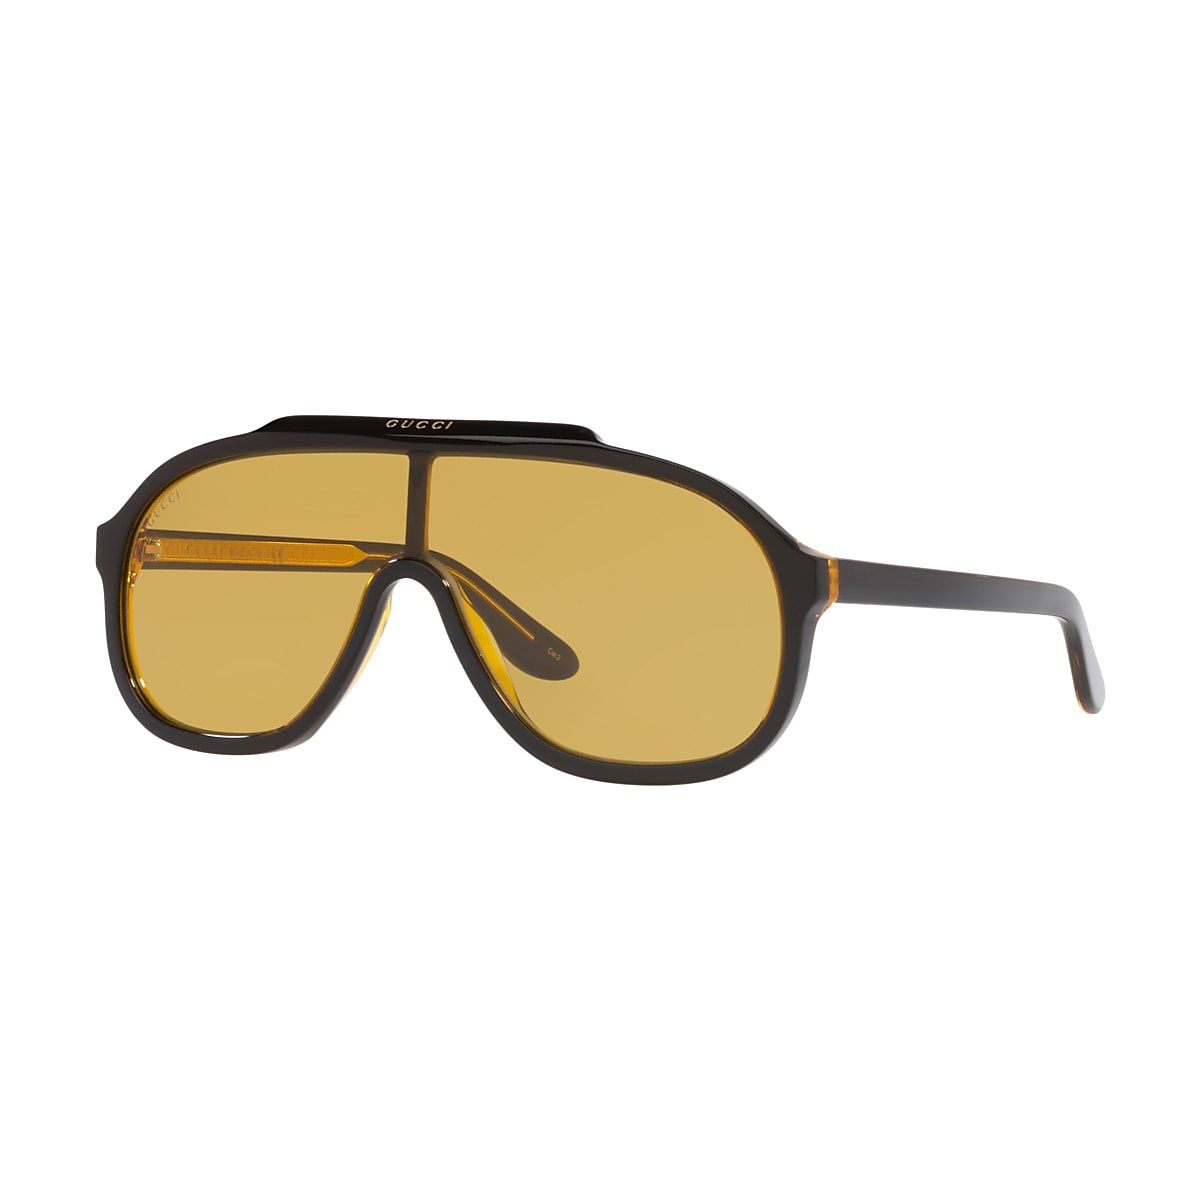 GG1038S Yellow & Black Sunglasses | Hut USA